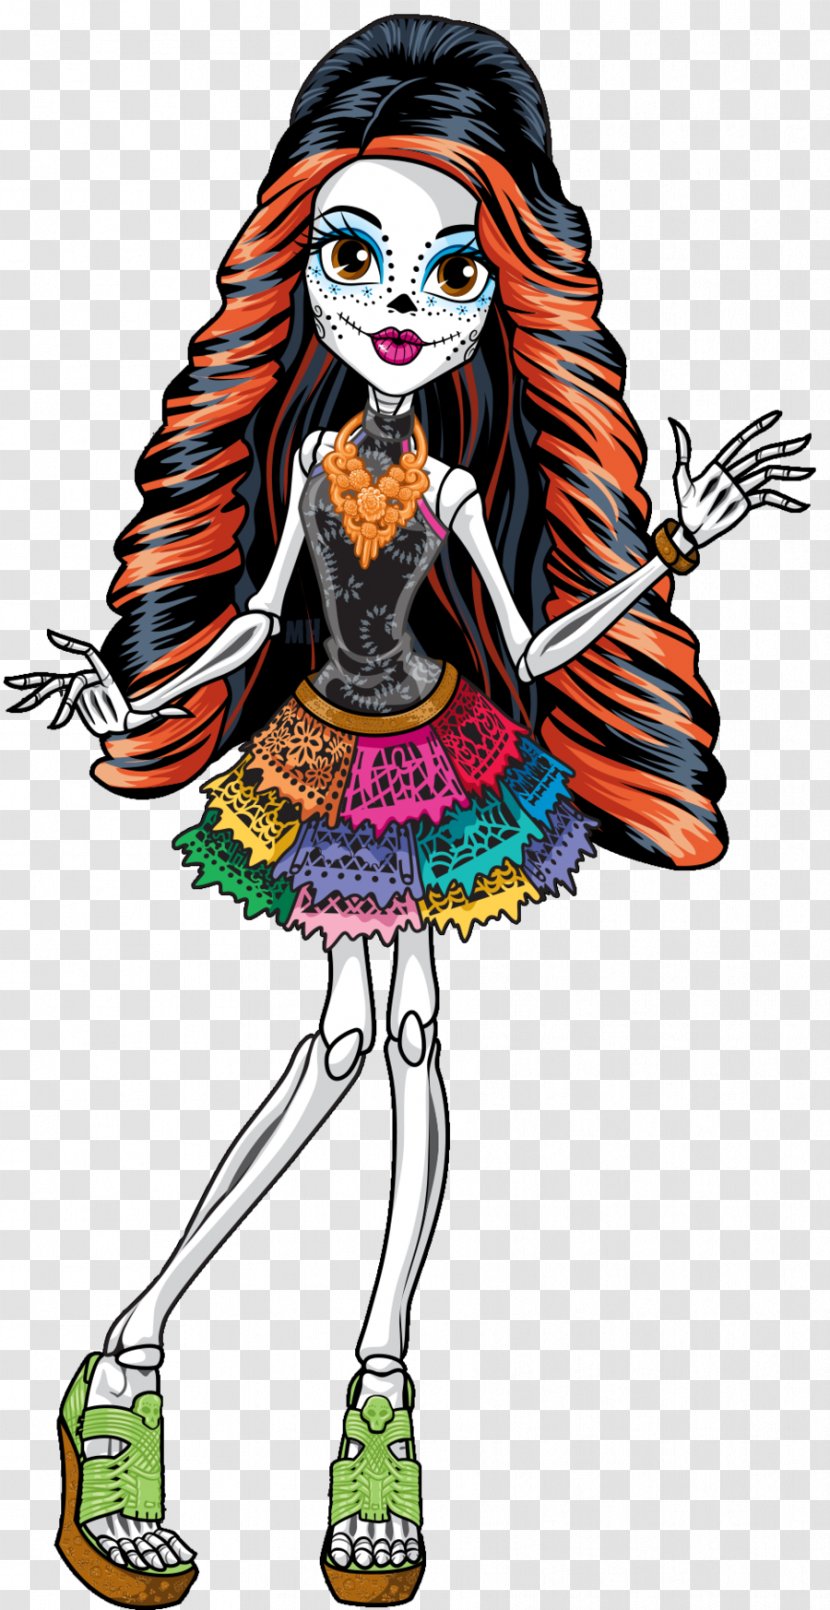 Monster High Skelita Calaveras Doll Toy - Costume Design Transparent PNG